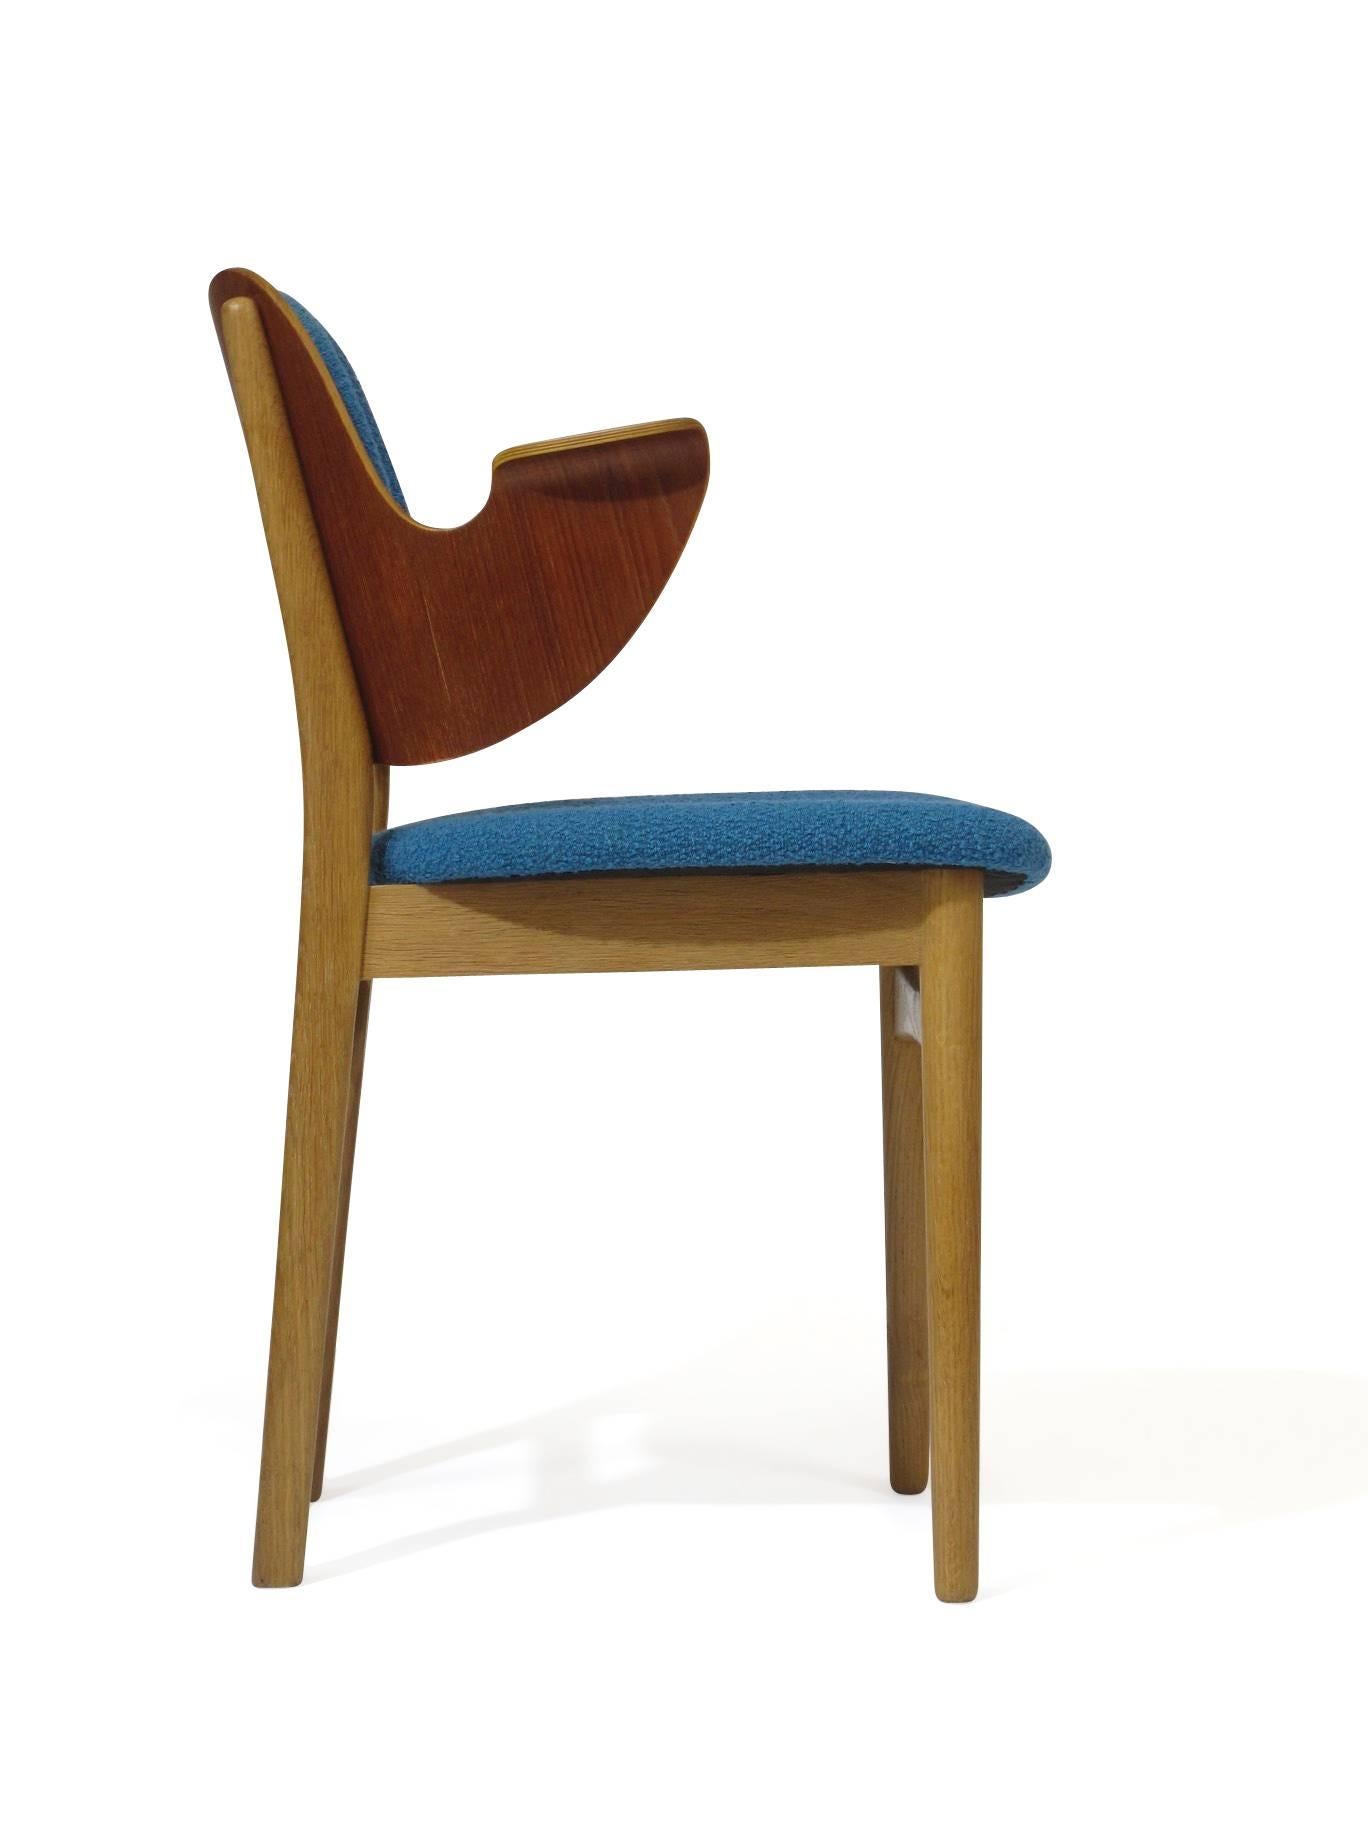 Mid-Century side armchair designed by Hans Olsen for Bramin, model 107. Solid oak frame with molded teak backrest, newly upholstered in aqua blue Knoll bouclé textile.